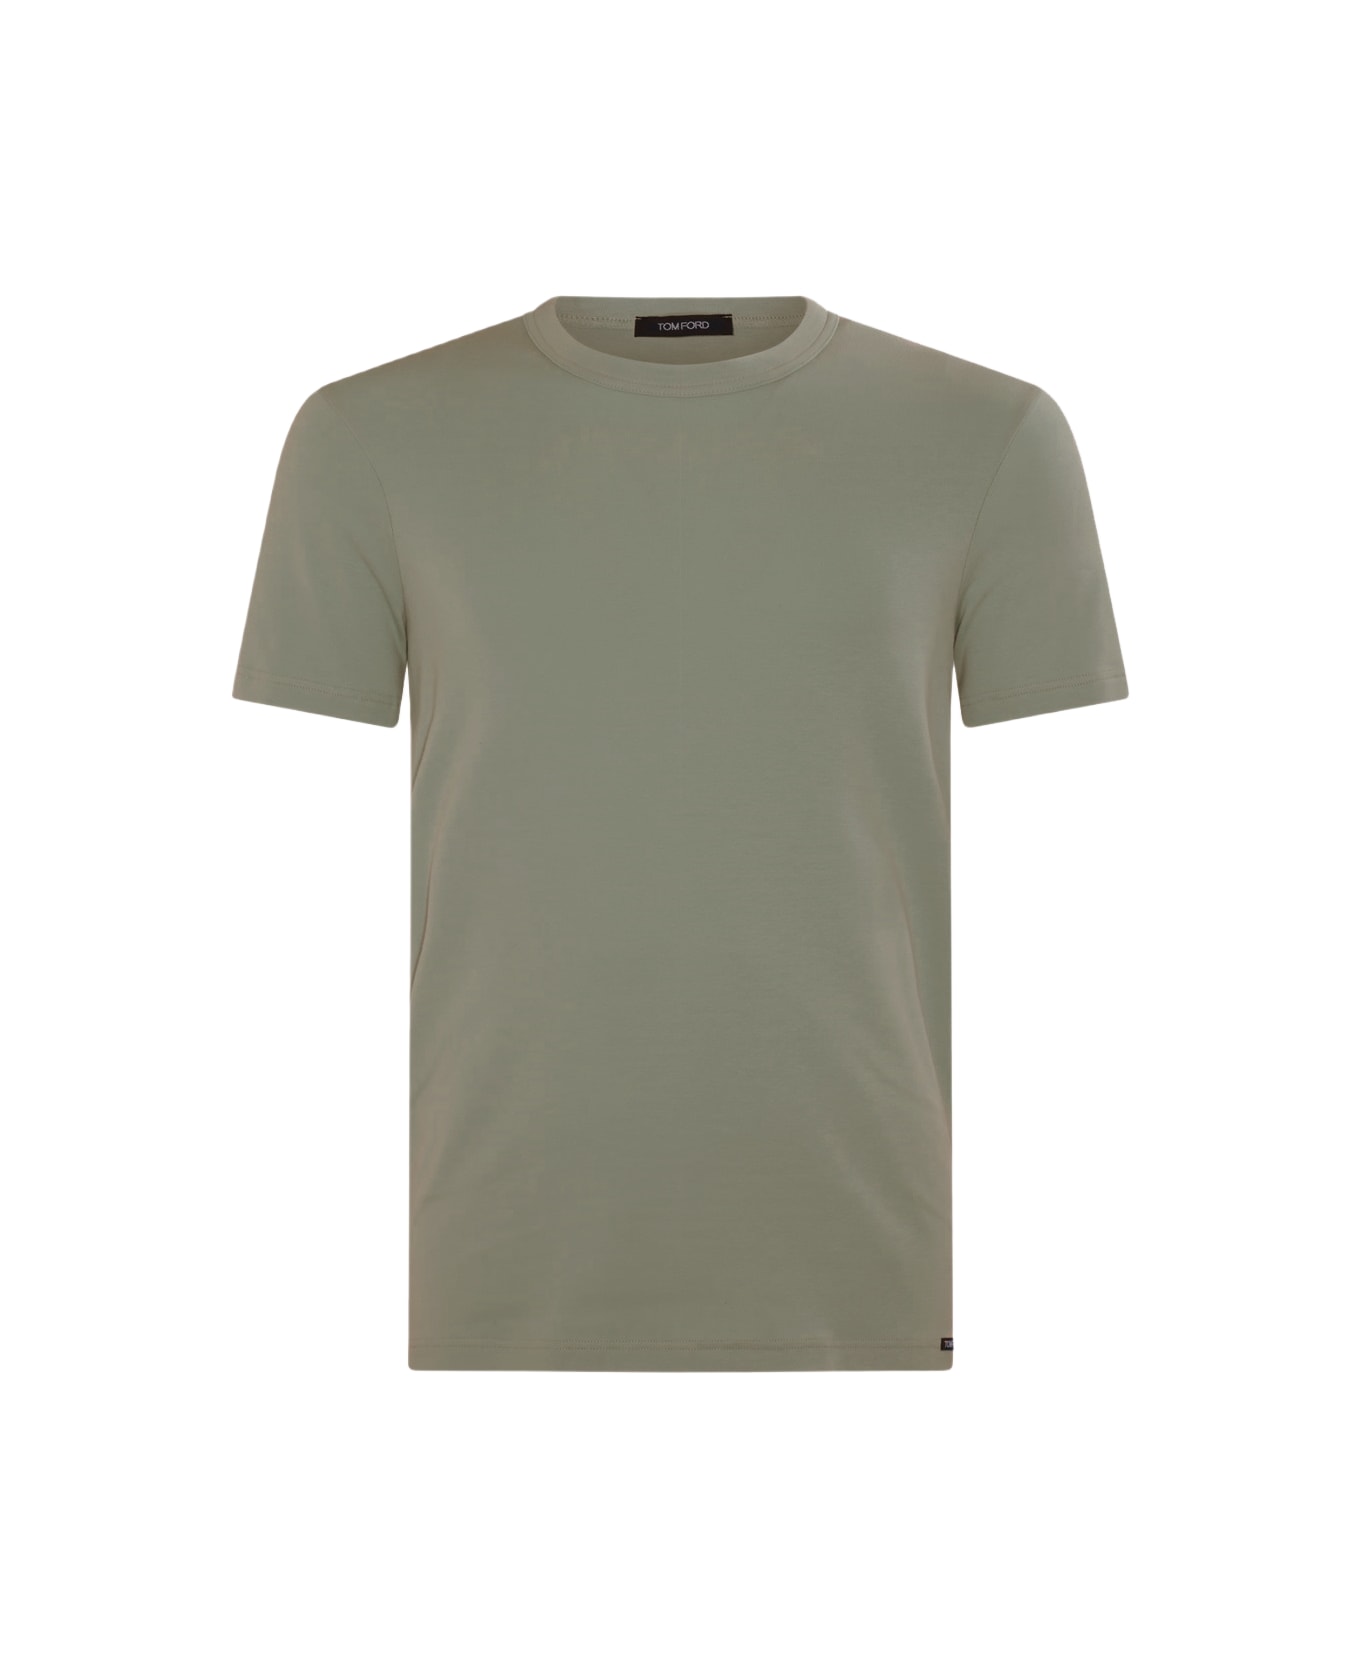 Tom Ford Matcha Green Cotton Blend T-shirt - MATCHA